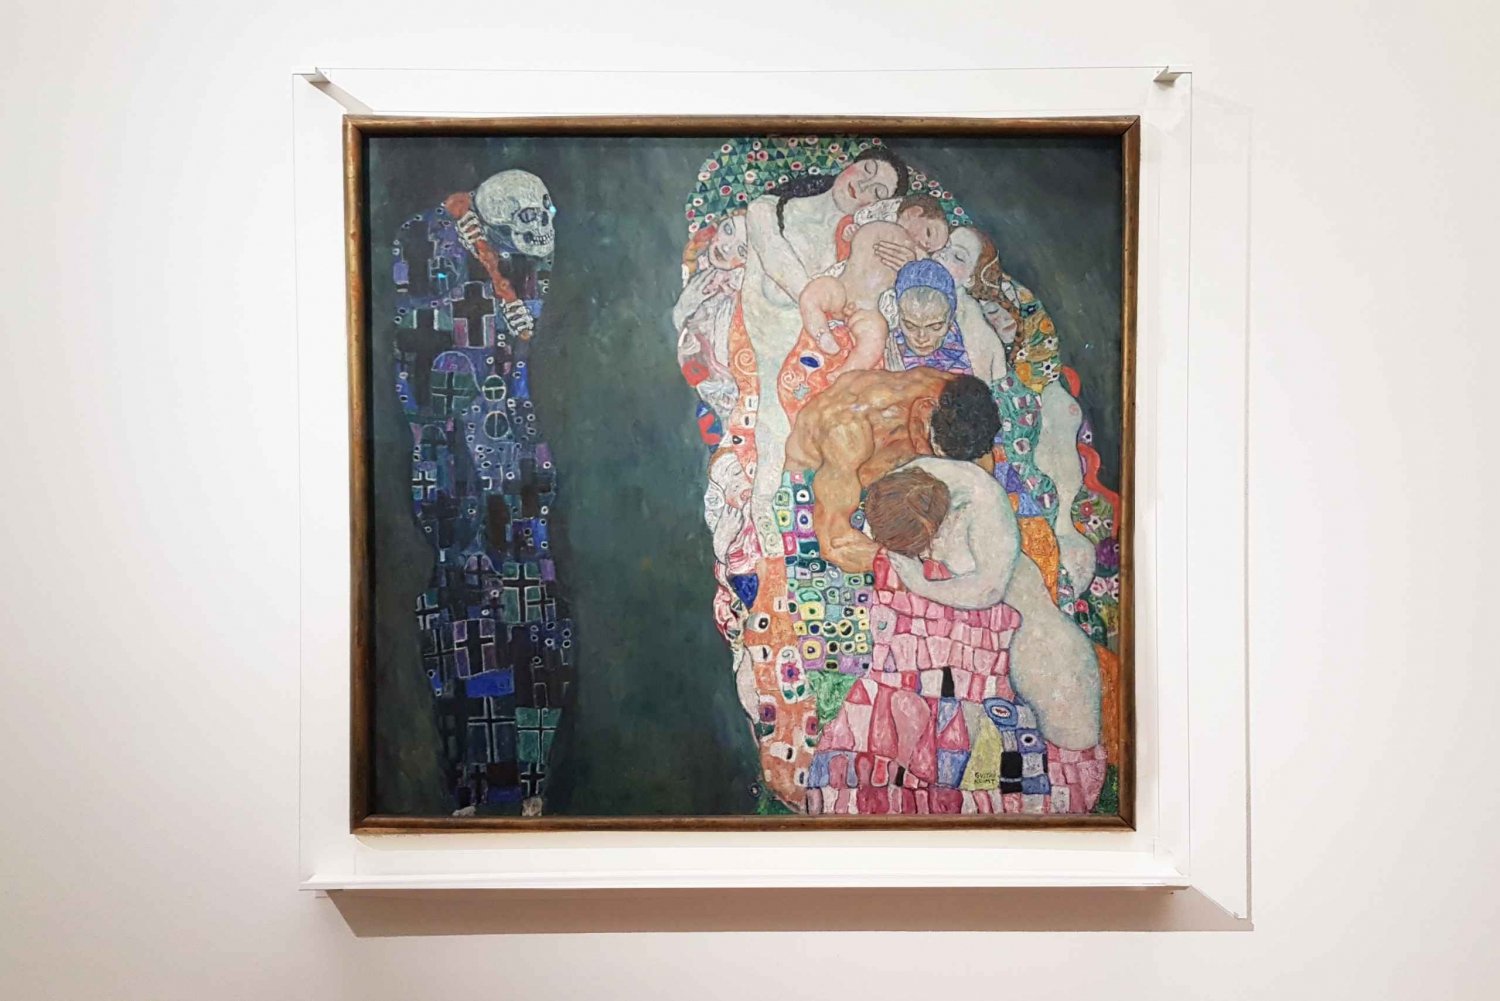 Viena: Visita à arte de Gustav Klimt em 3 museus com ingressos